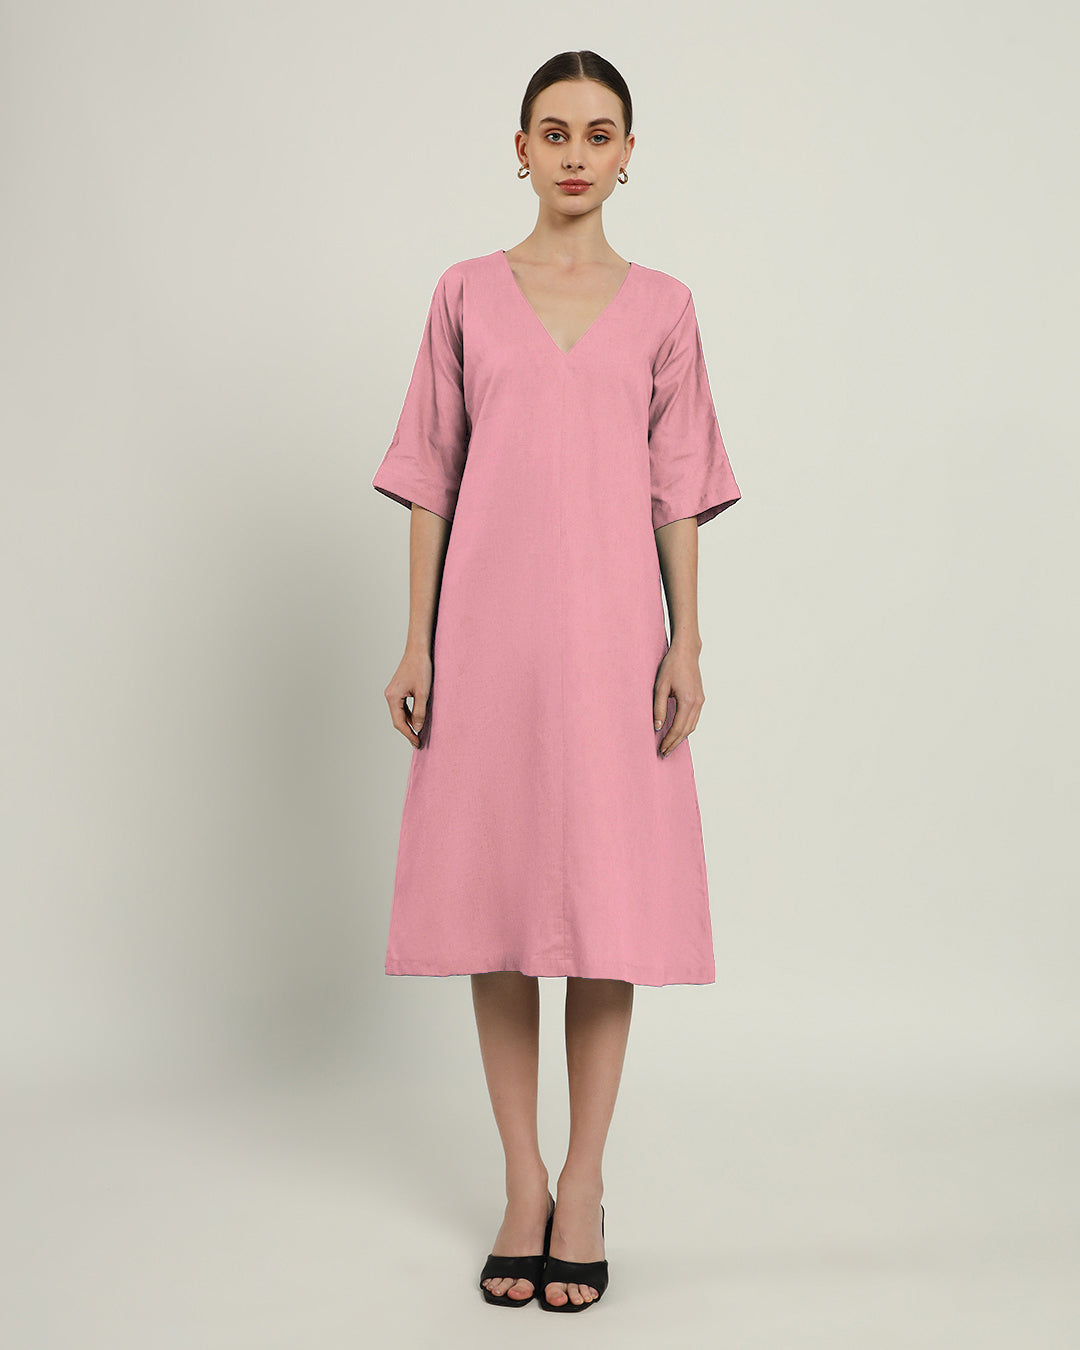 The Mildura Fondant Pink Cotton Dress